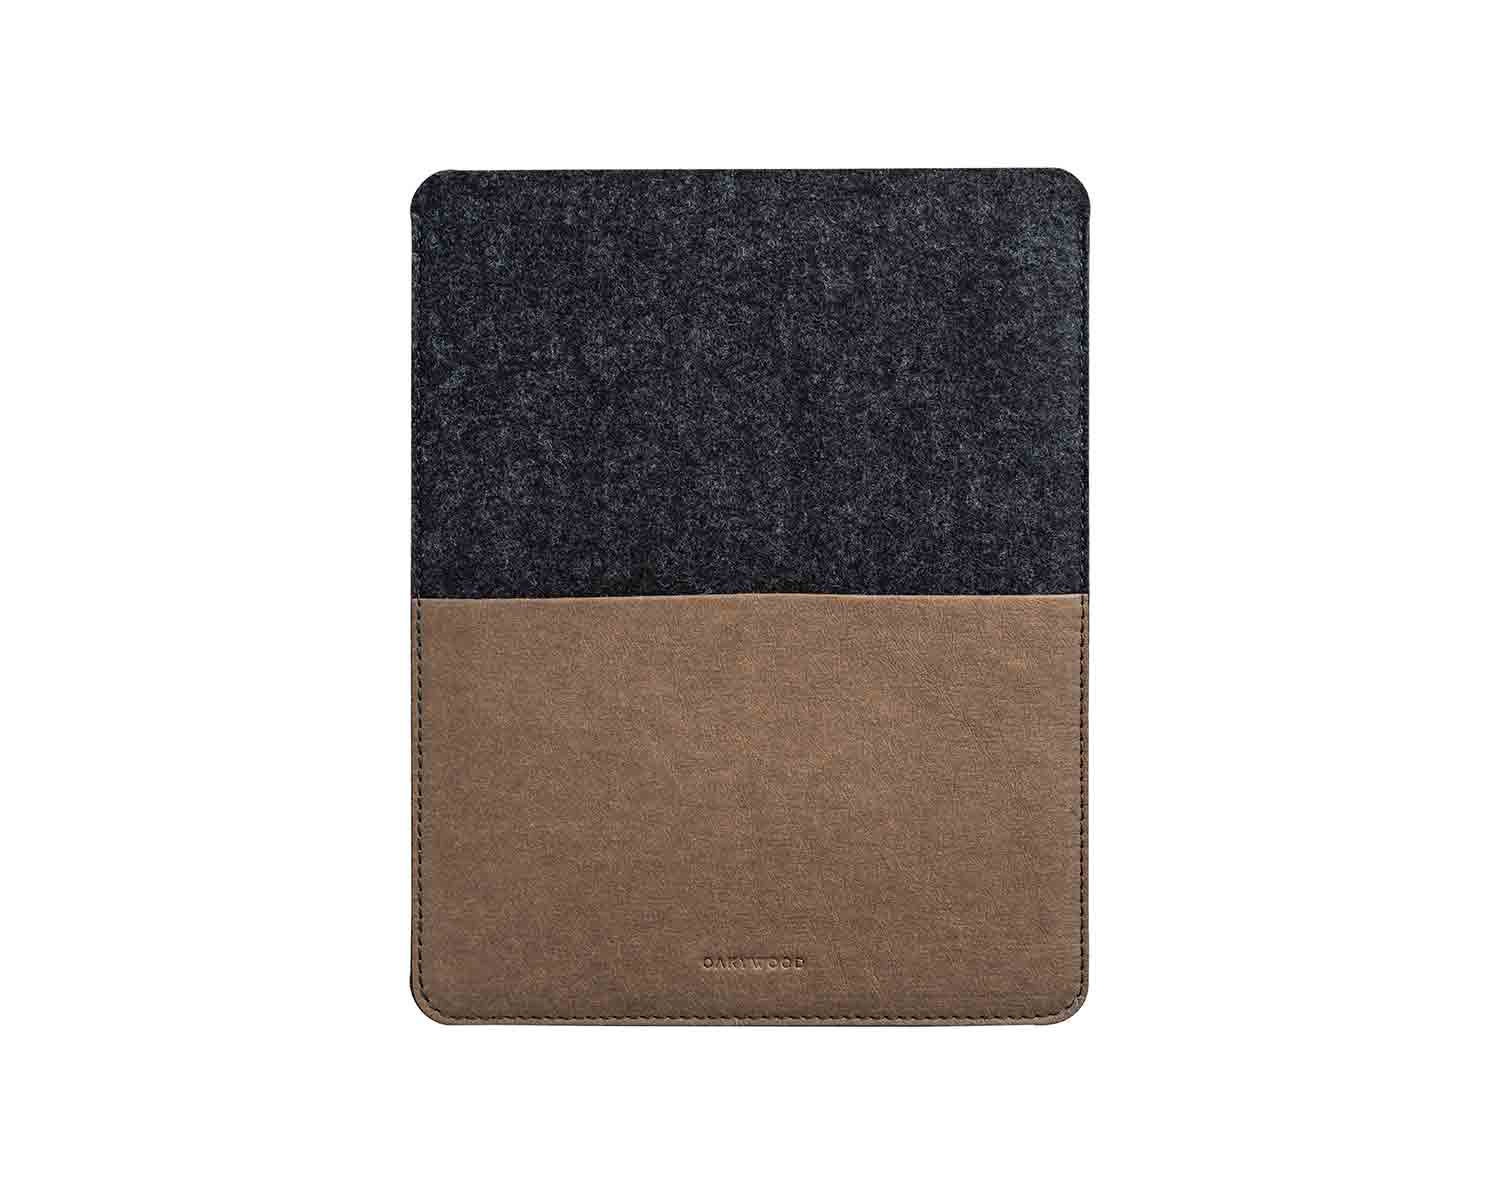 ipad macbook sleeves felt corkoak 454 12.9 inch black front